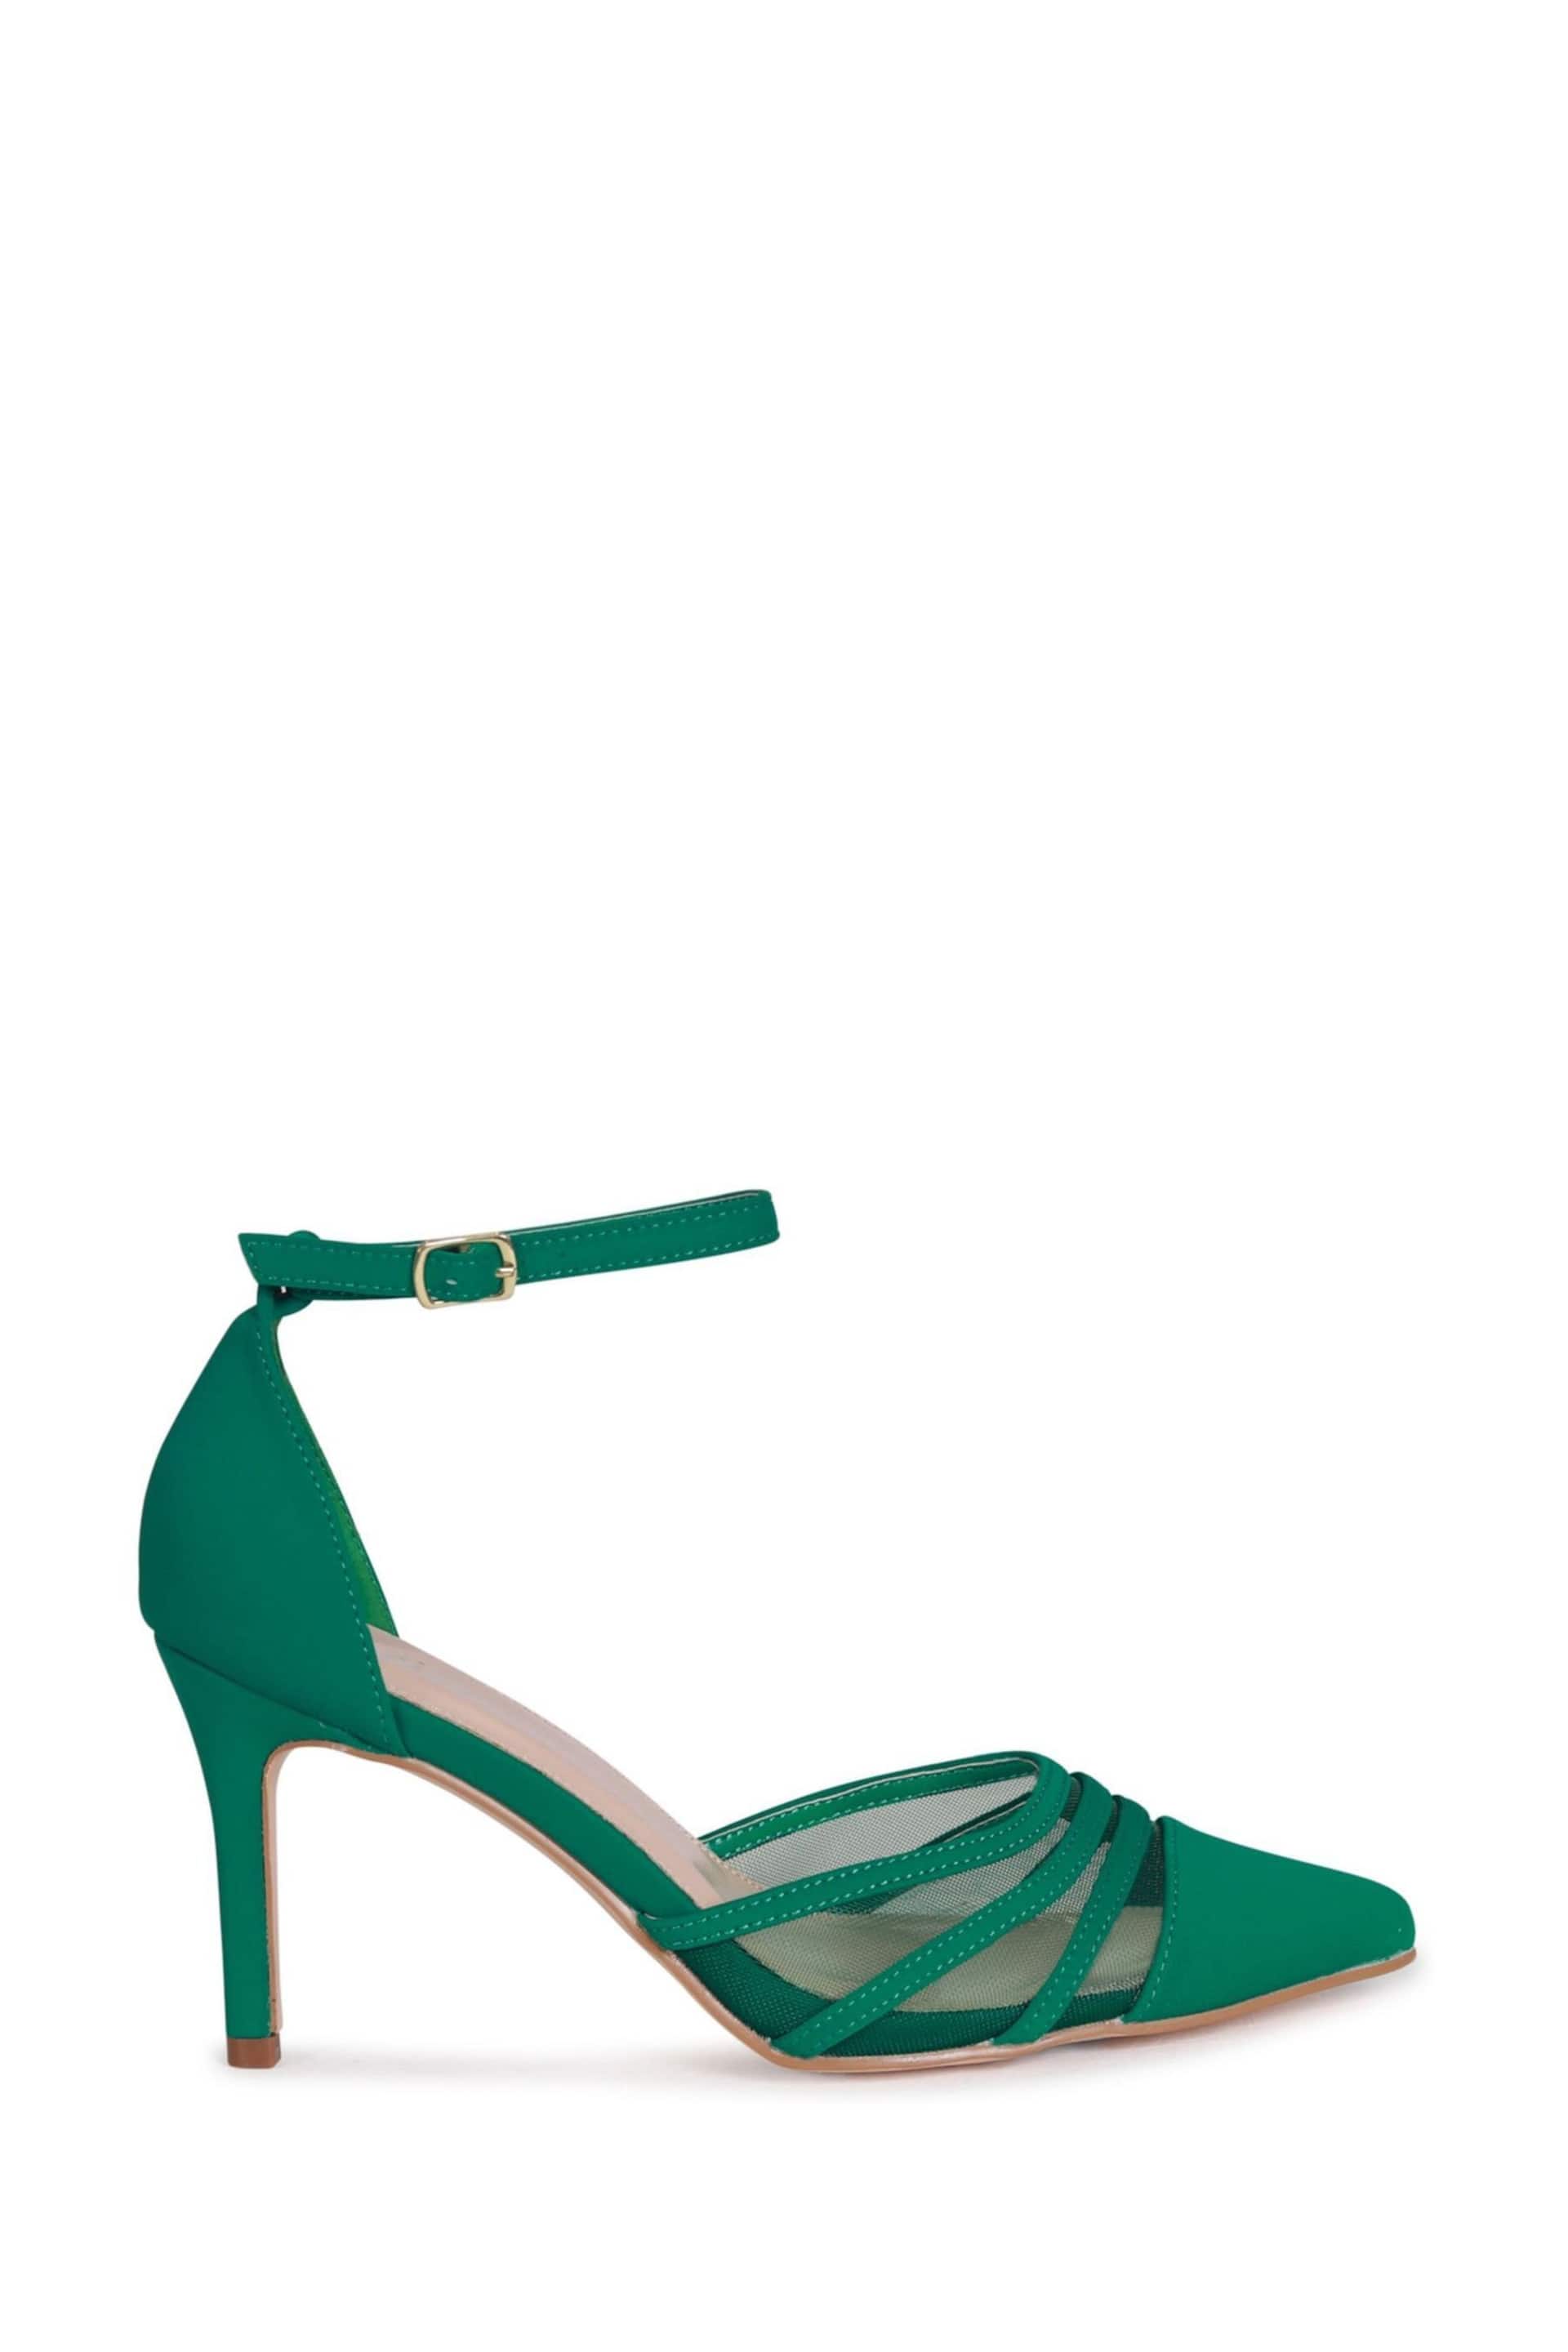 Linzi Green Serri Court Stiletto Heels With Mesh Front Detail - Image 2 of 4